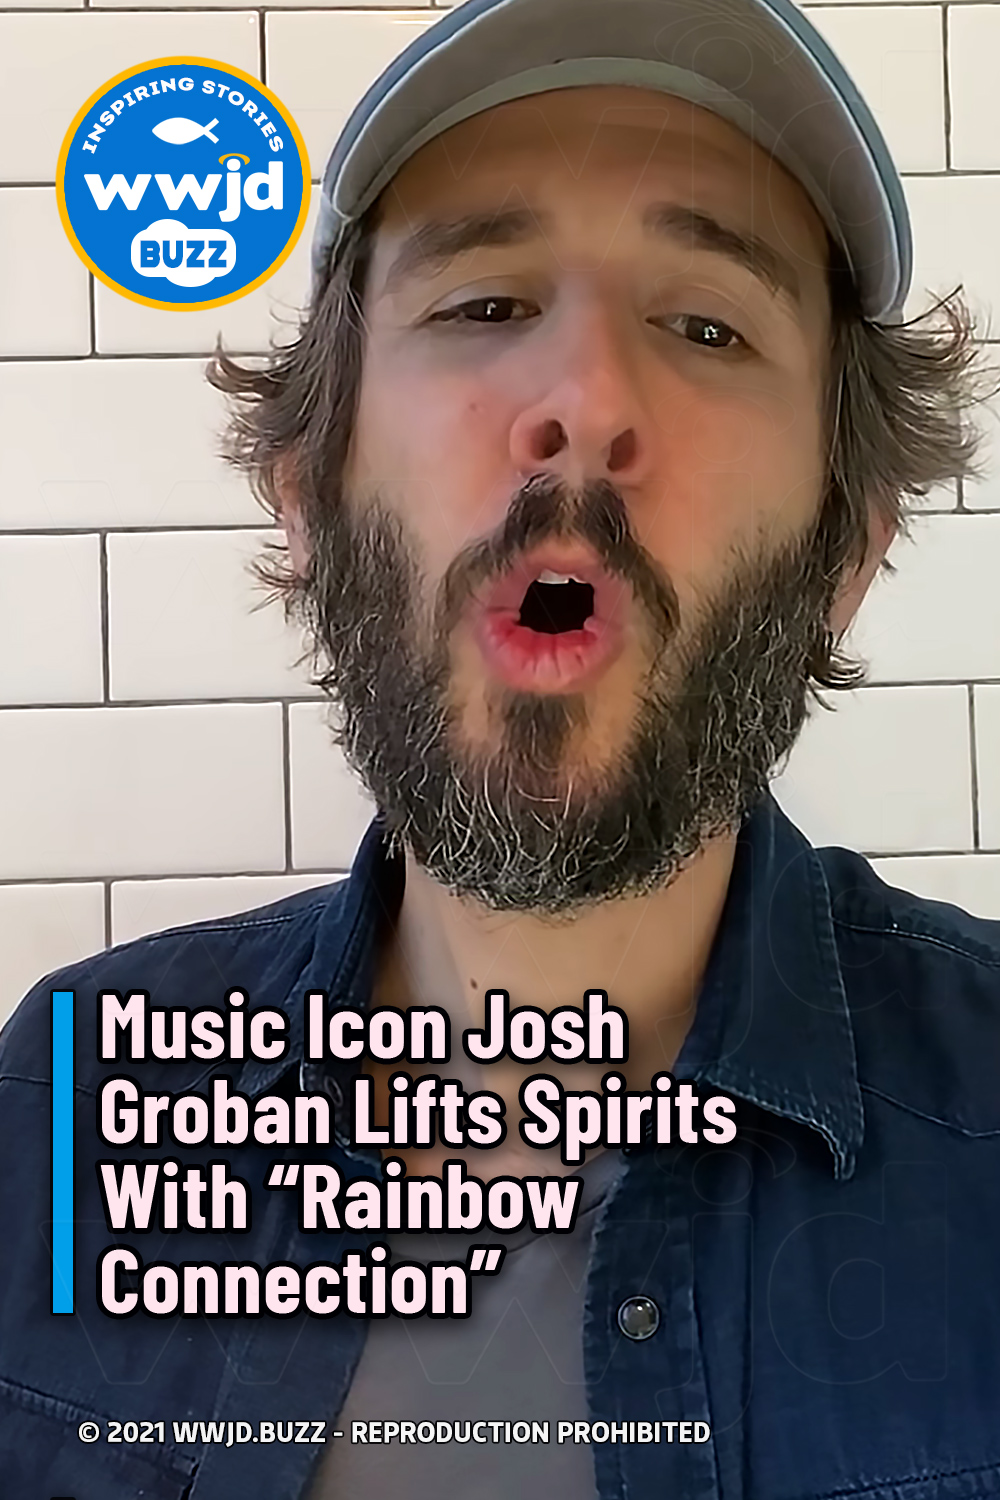 Music Icon Josh Groban Lifts Spirits With “Rainbow Connection”